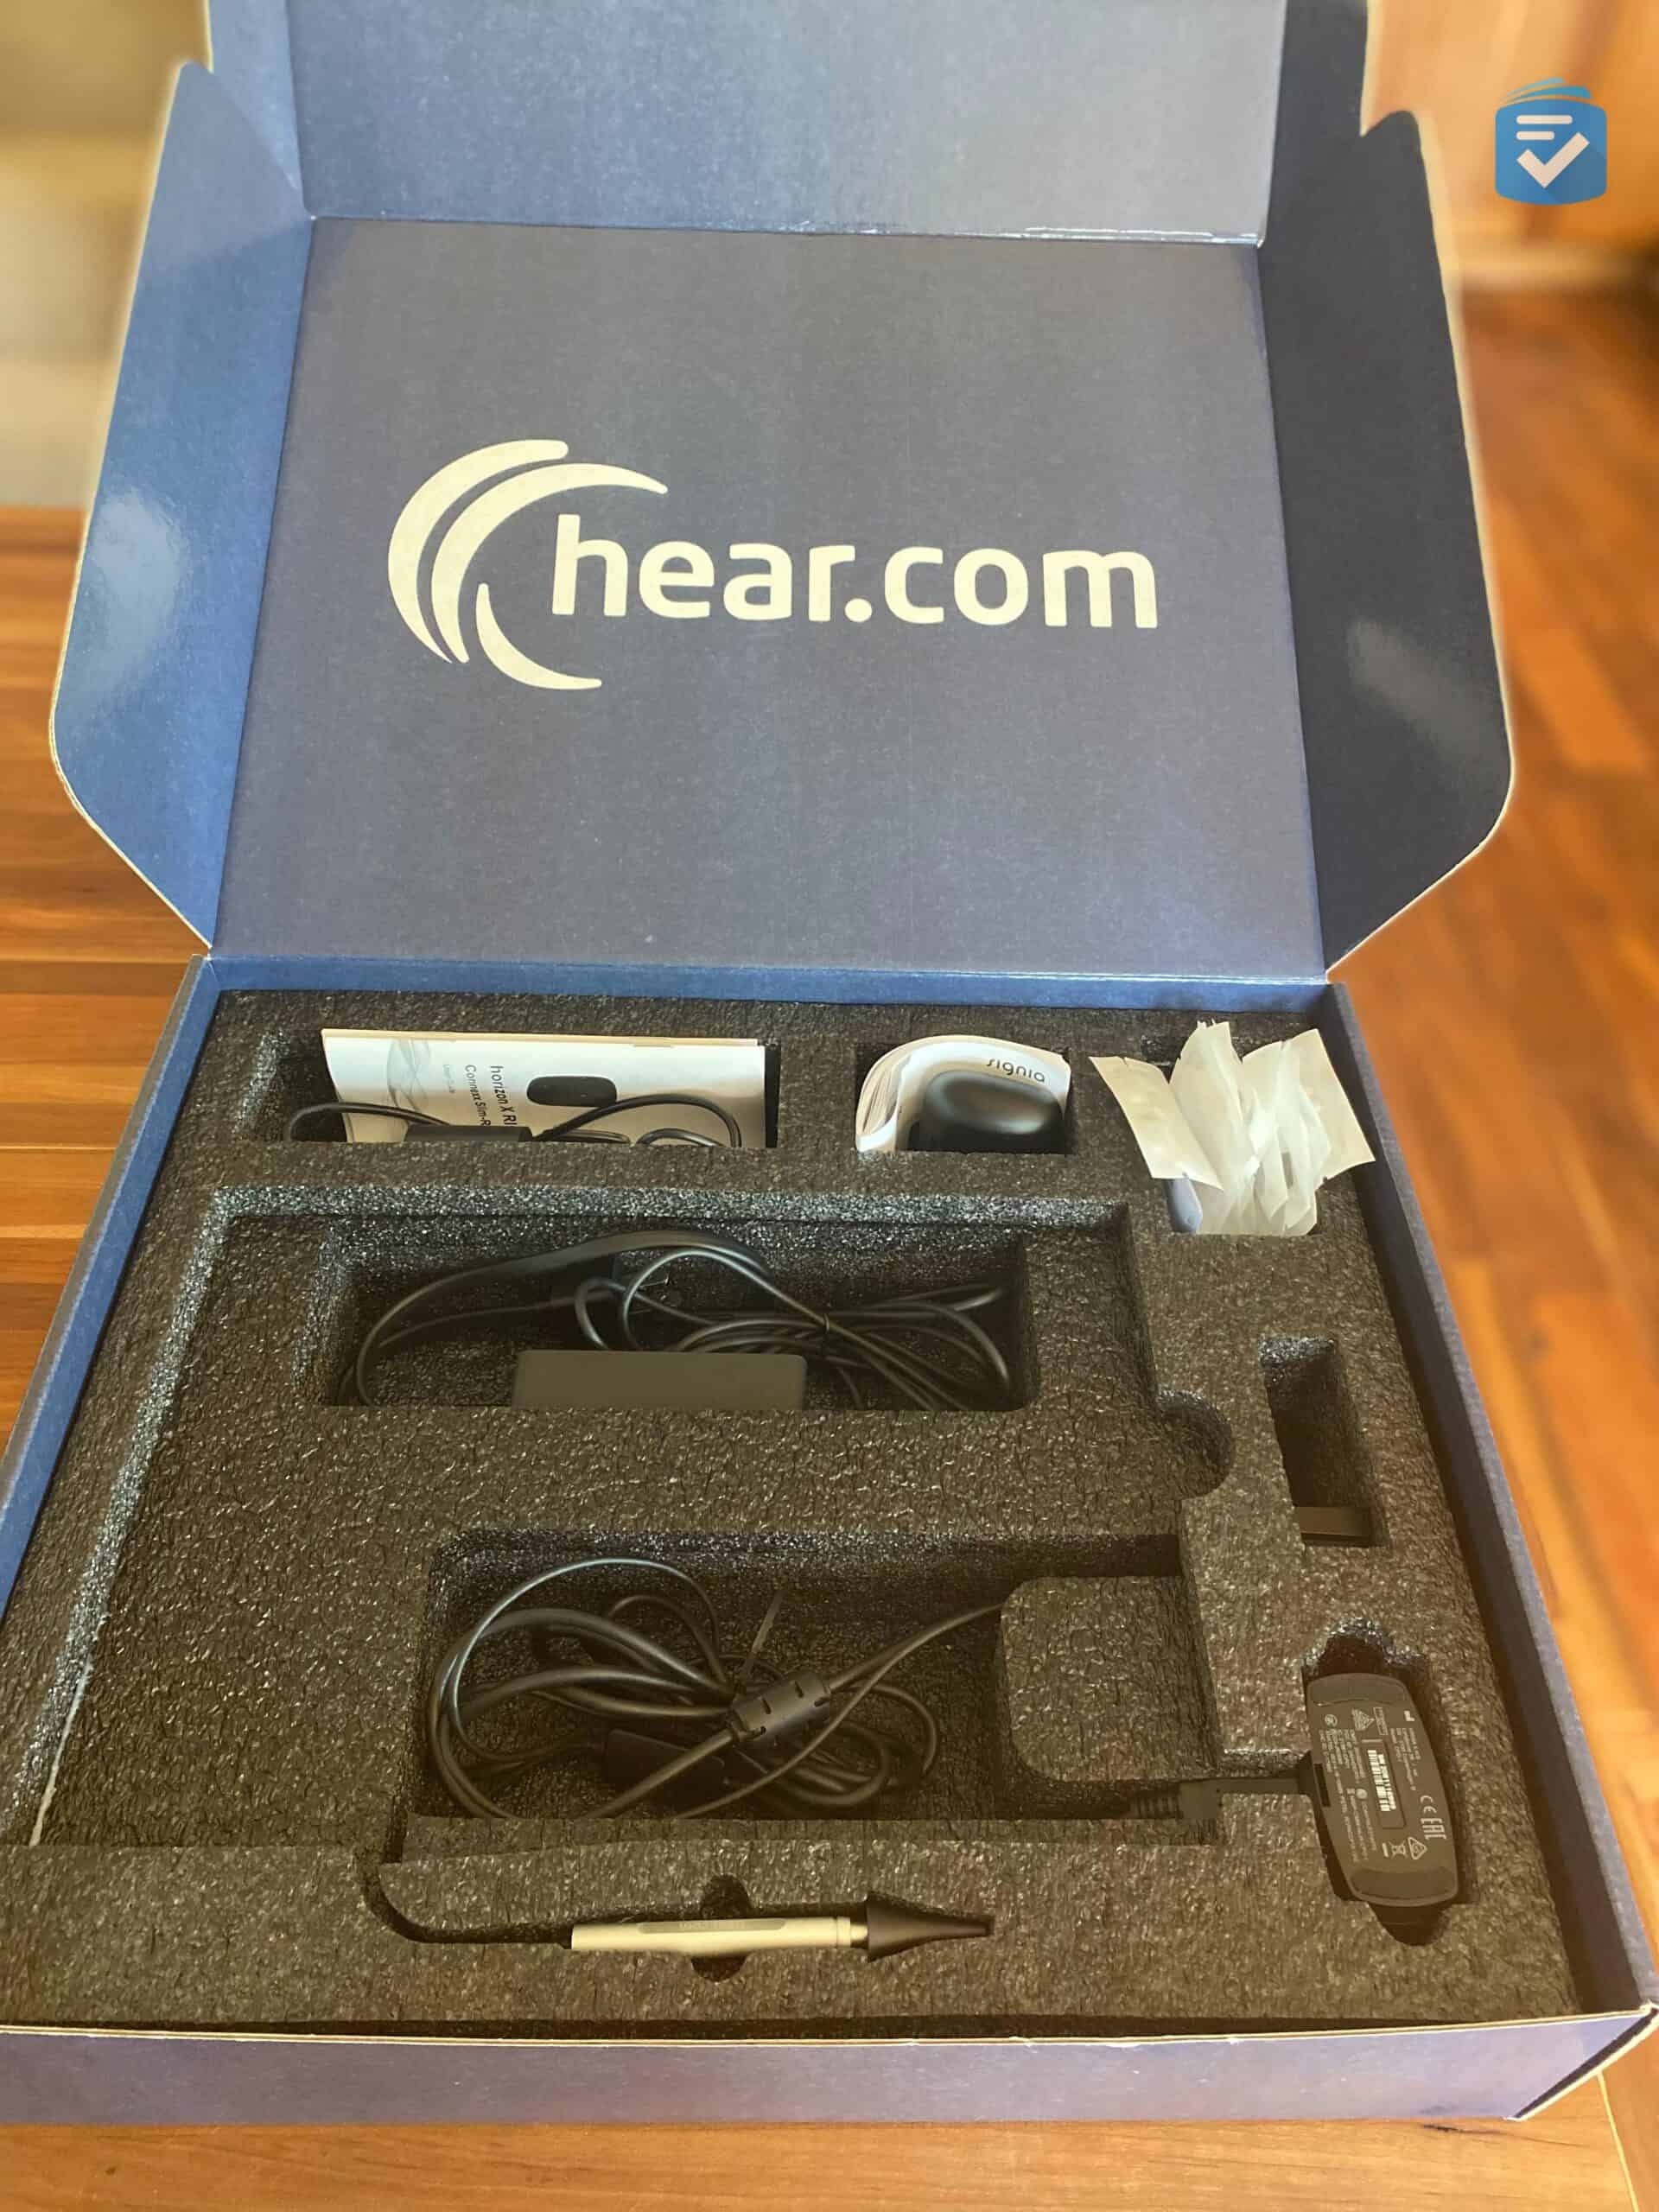 Hear.com Packaging